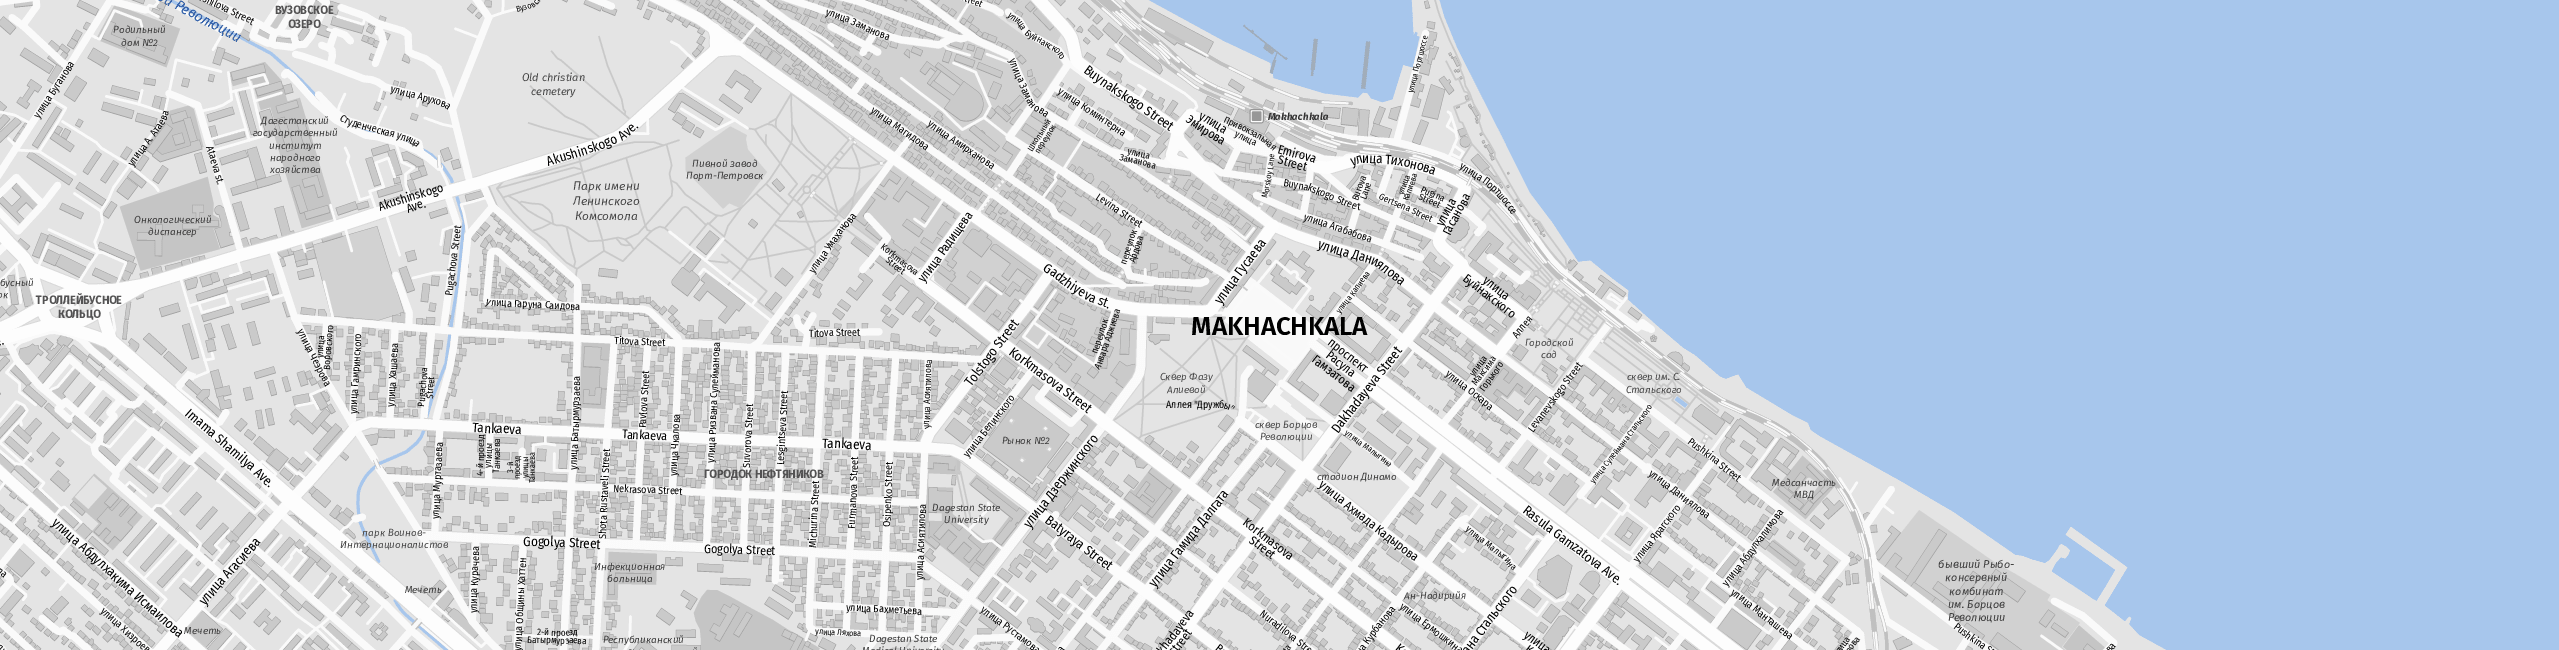 Stadtplan Makhachkala zum Downloaden.